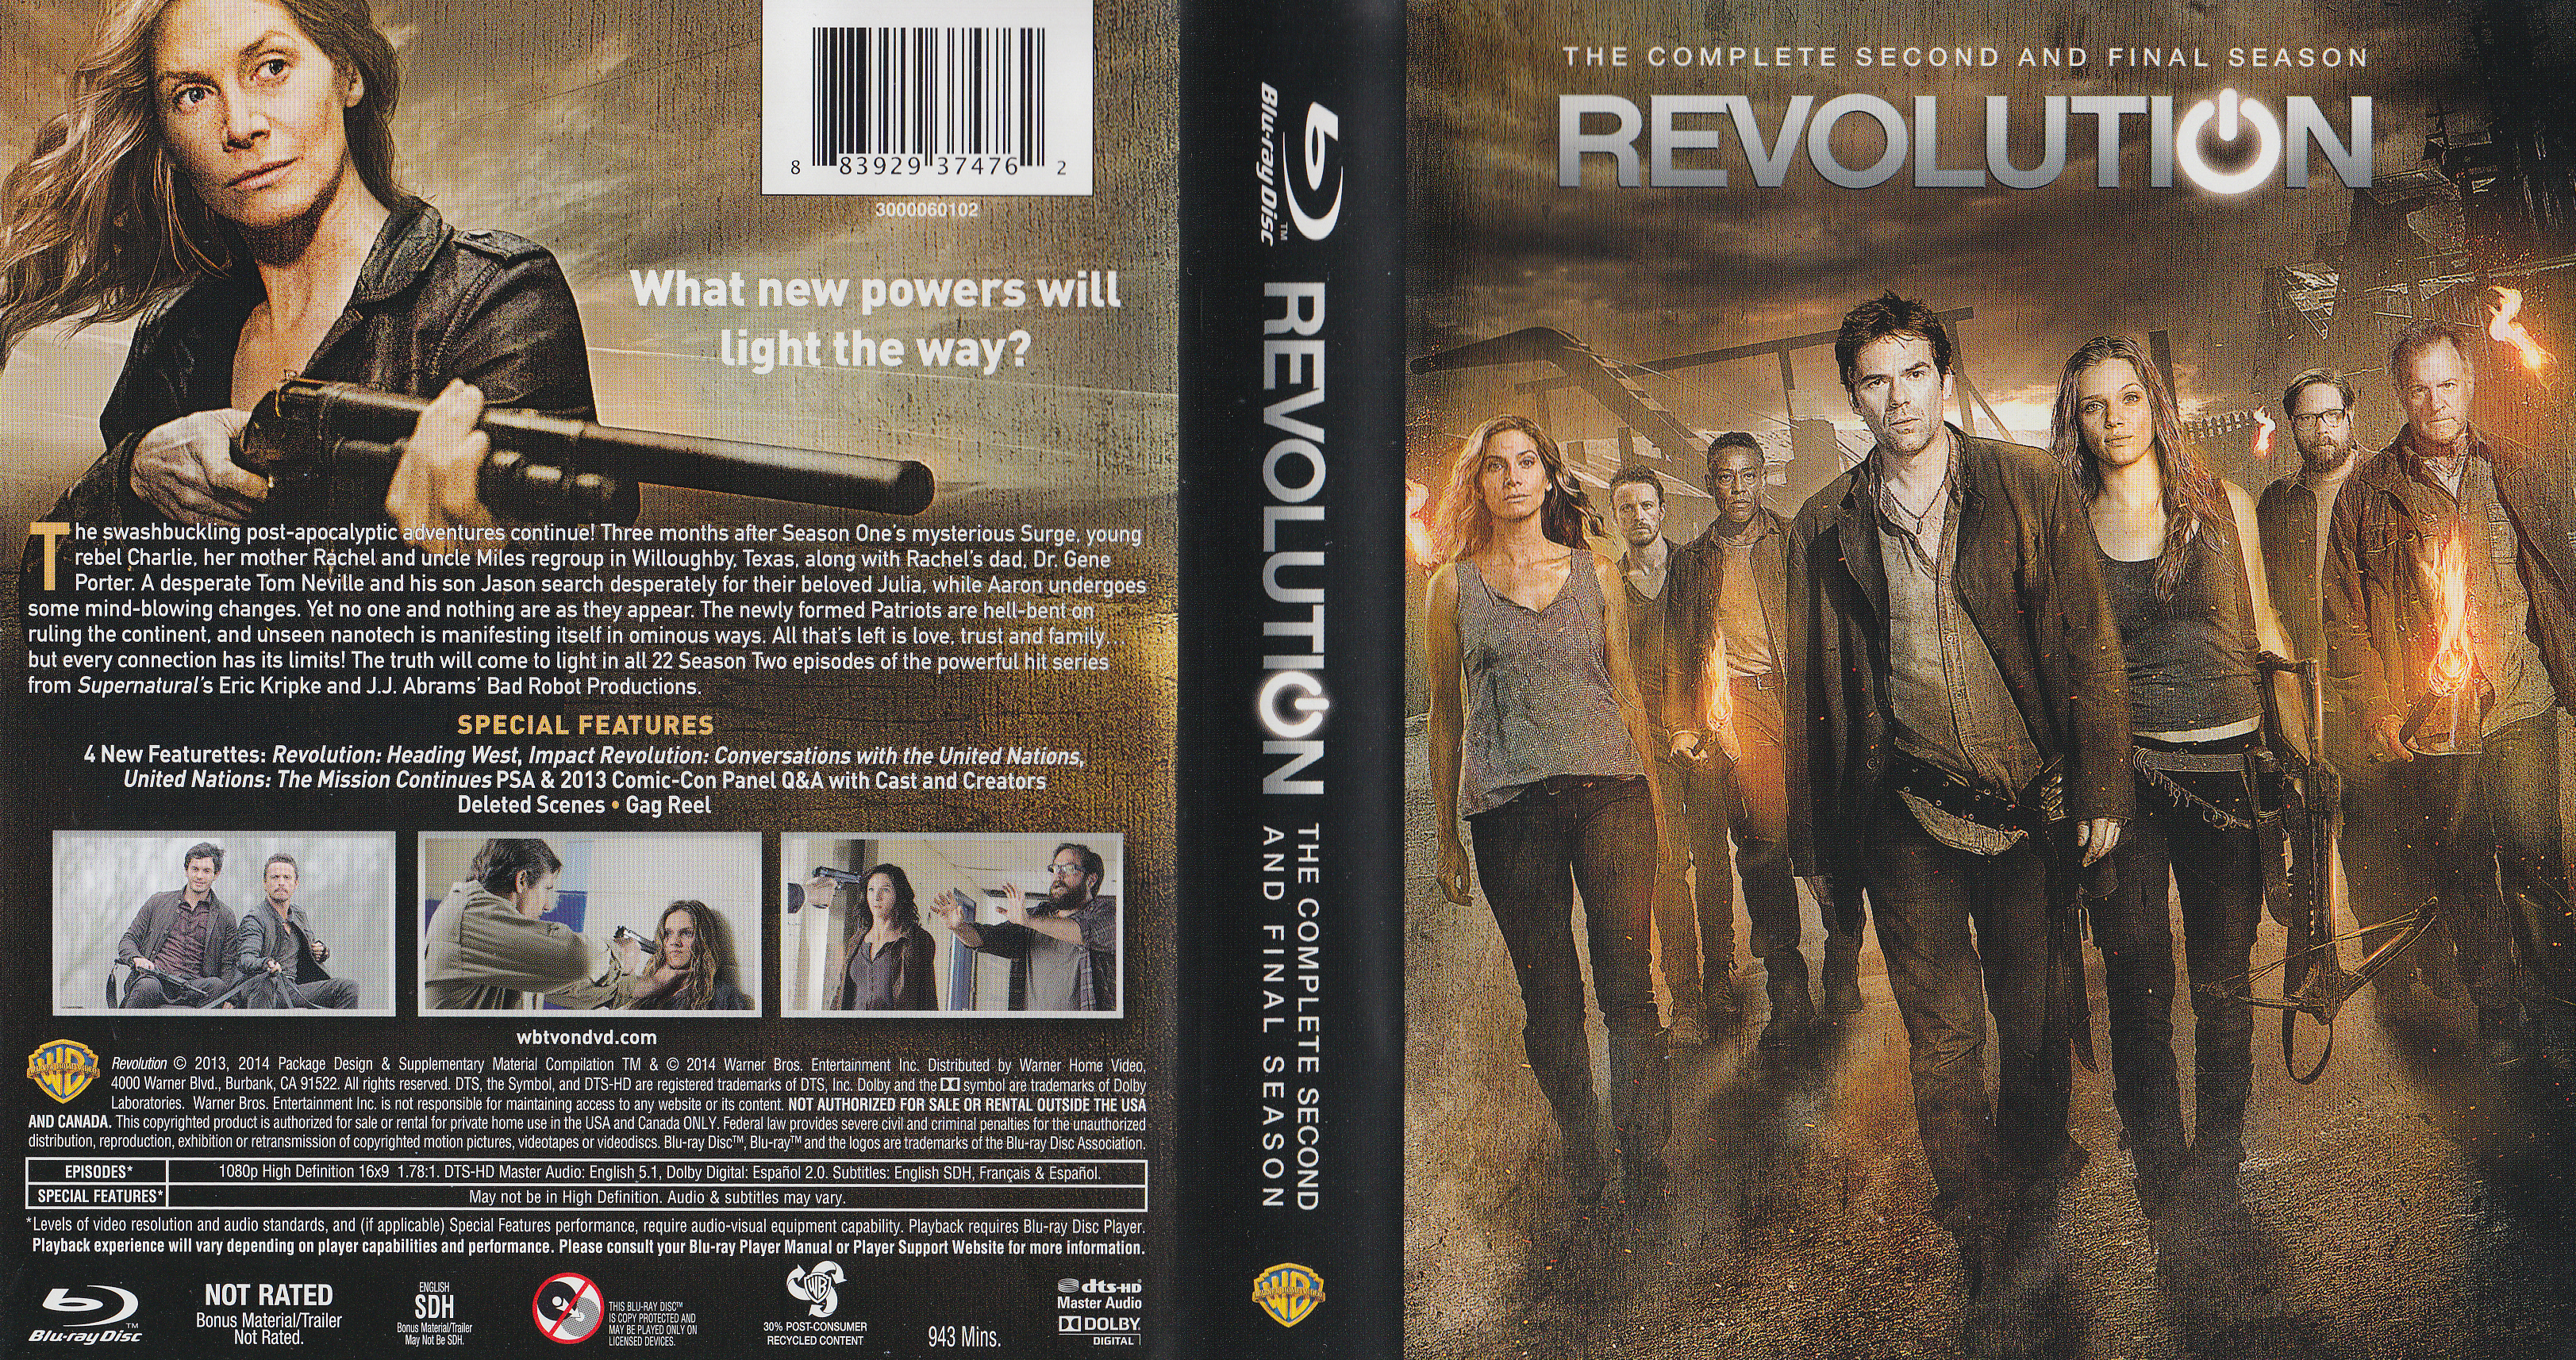 Jaquette DVD Revolution Saison 2 Zone 1 (BLU-RAY)